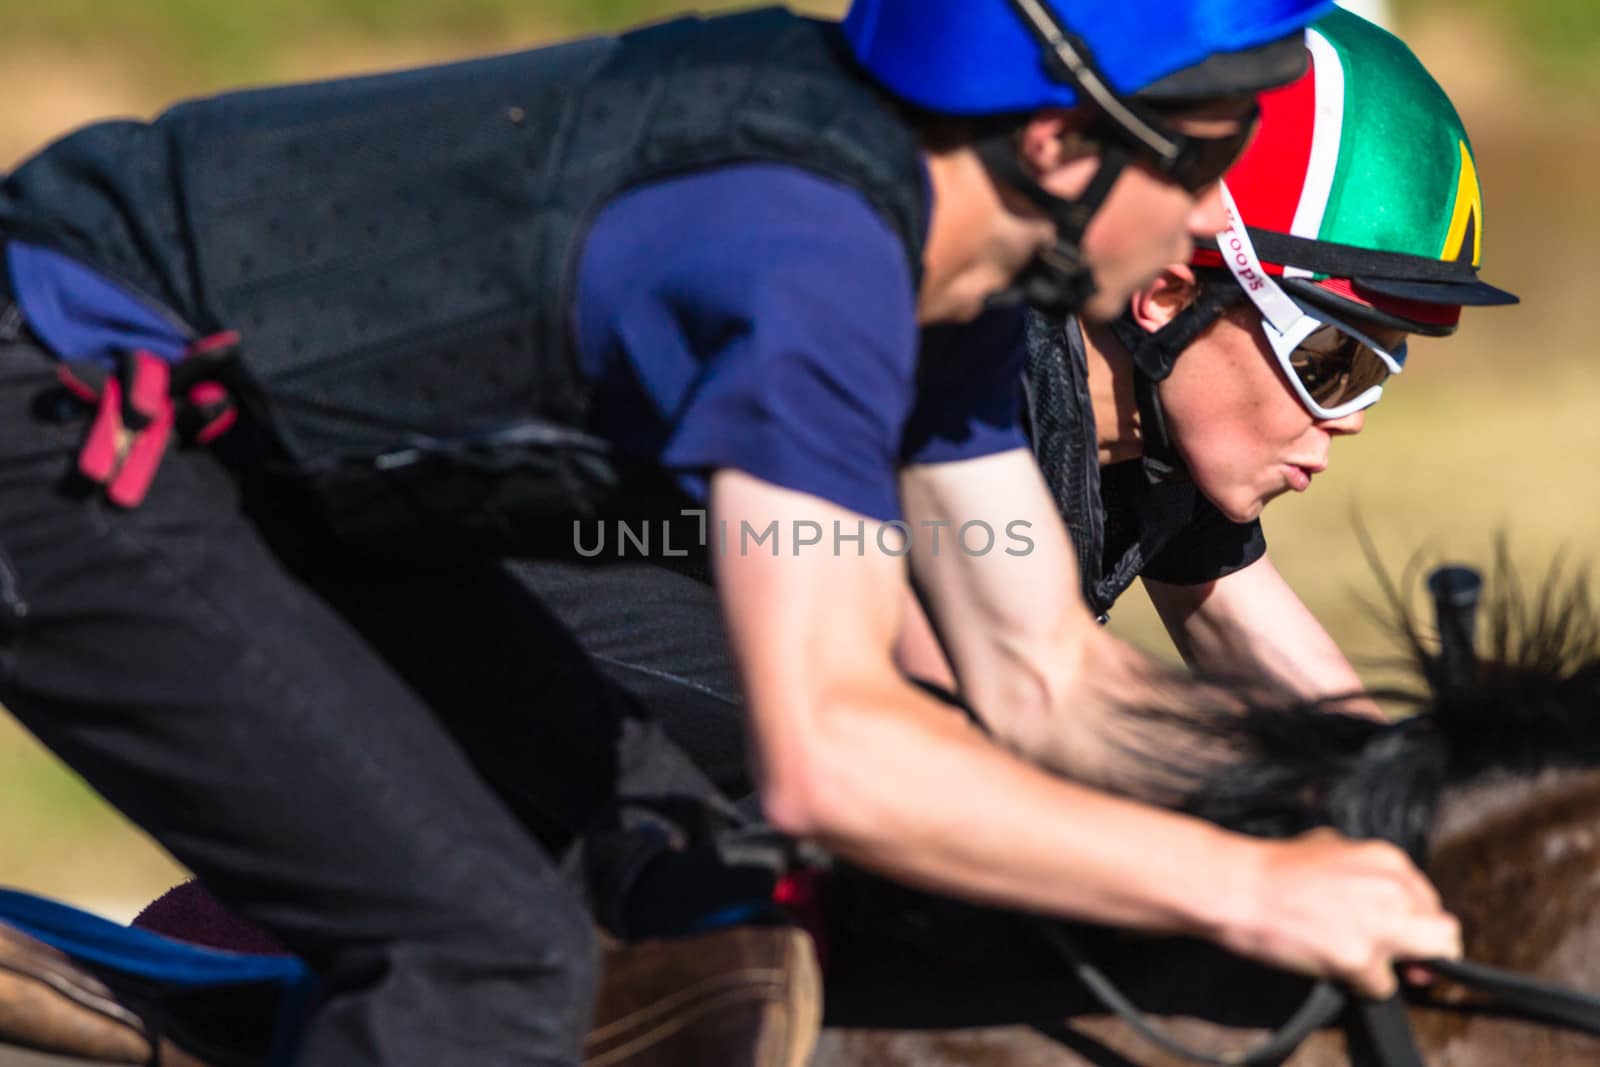 Jockeys close focus detail riding focusing on race horse galloping on sand track training